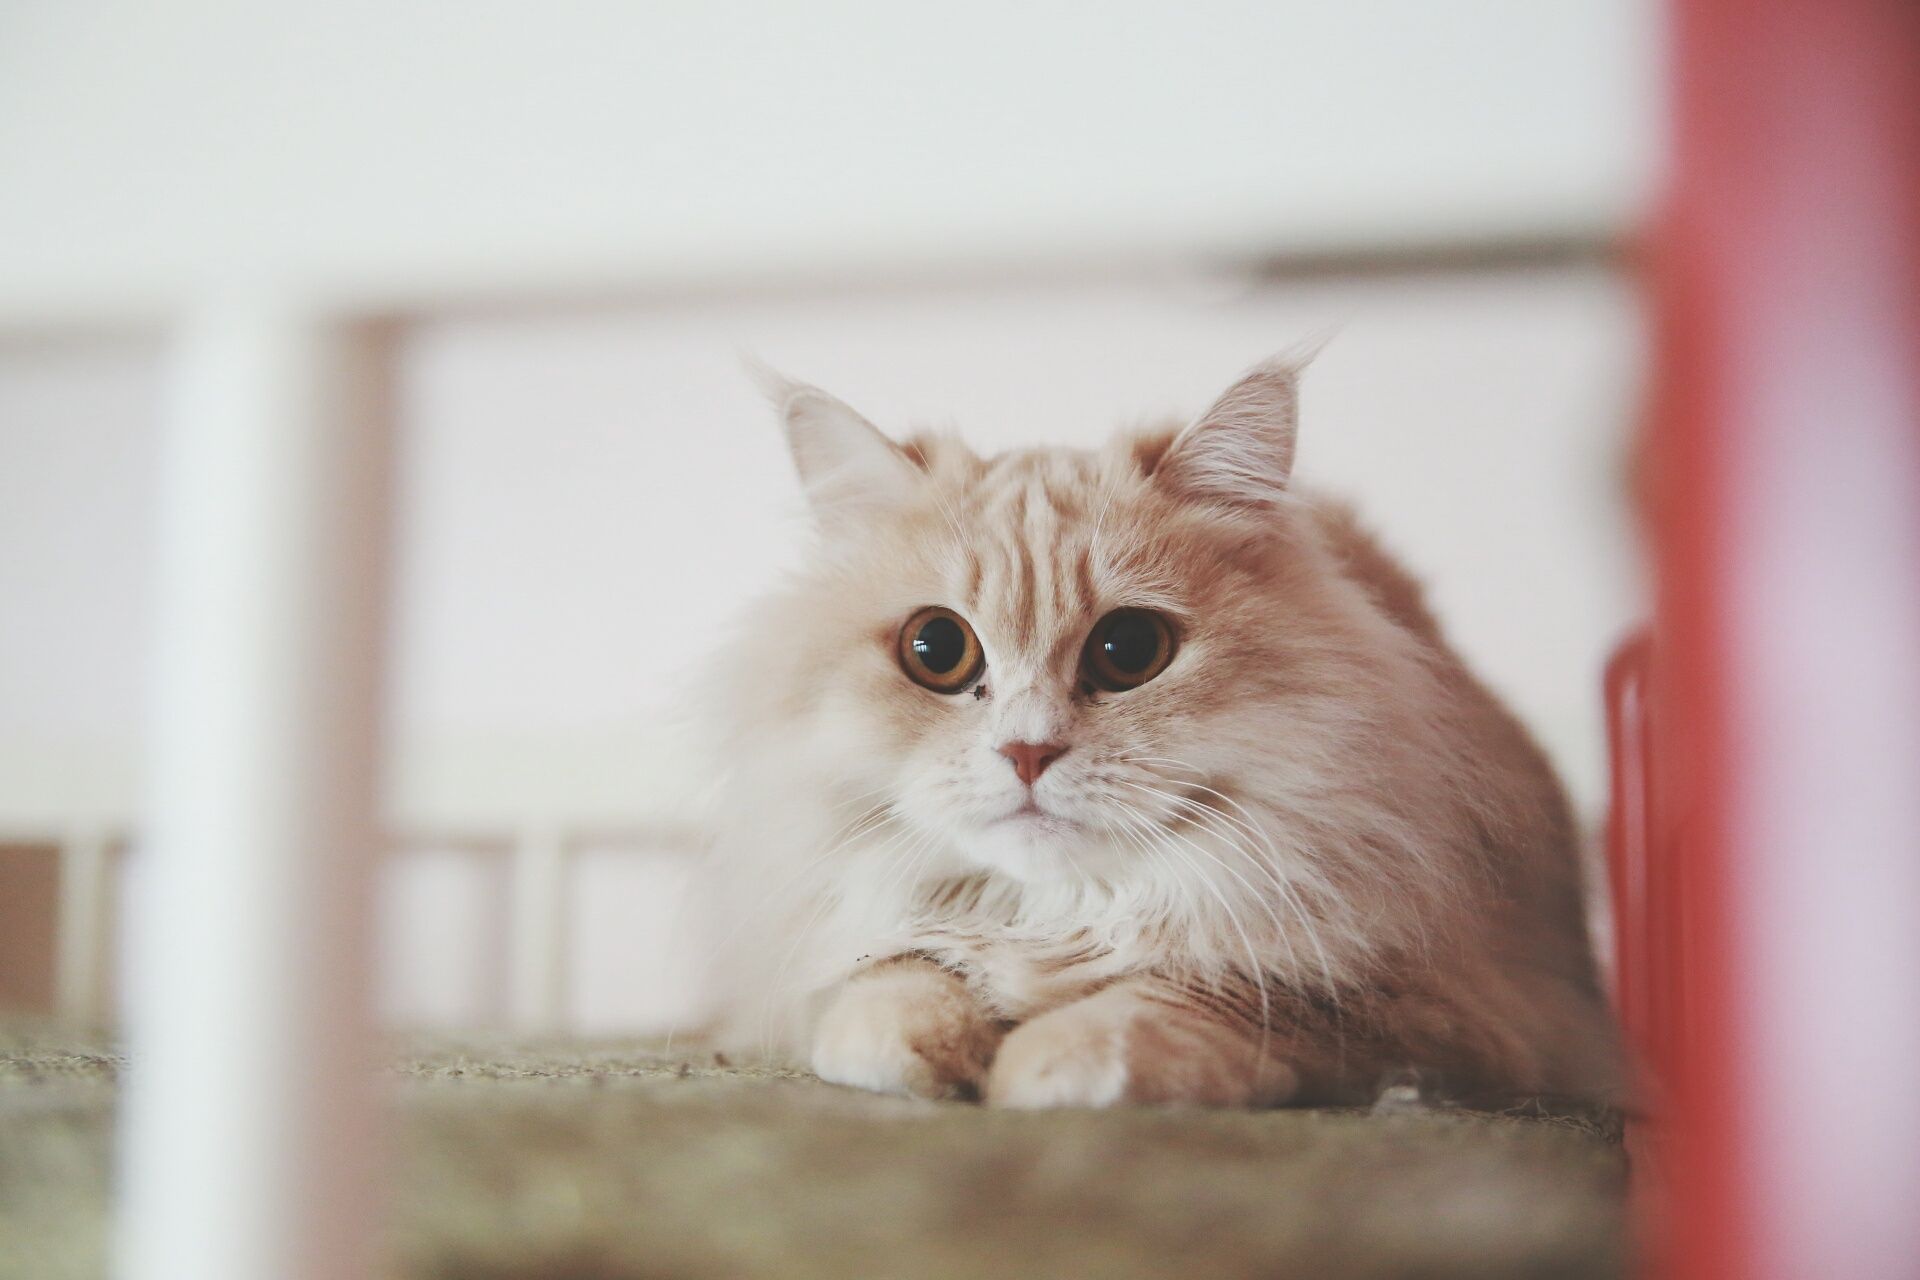 A cream colored Turkish Angora cat